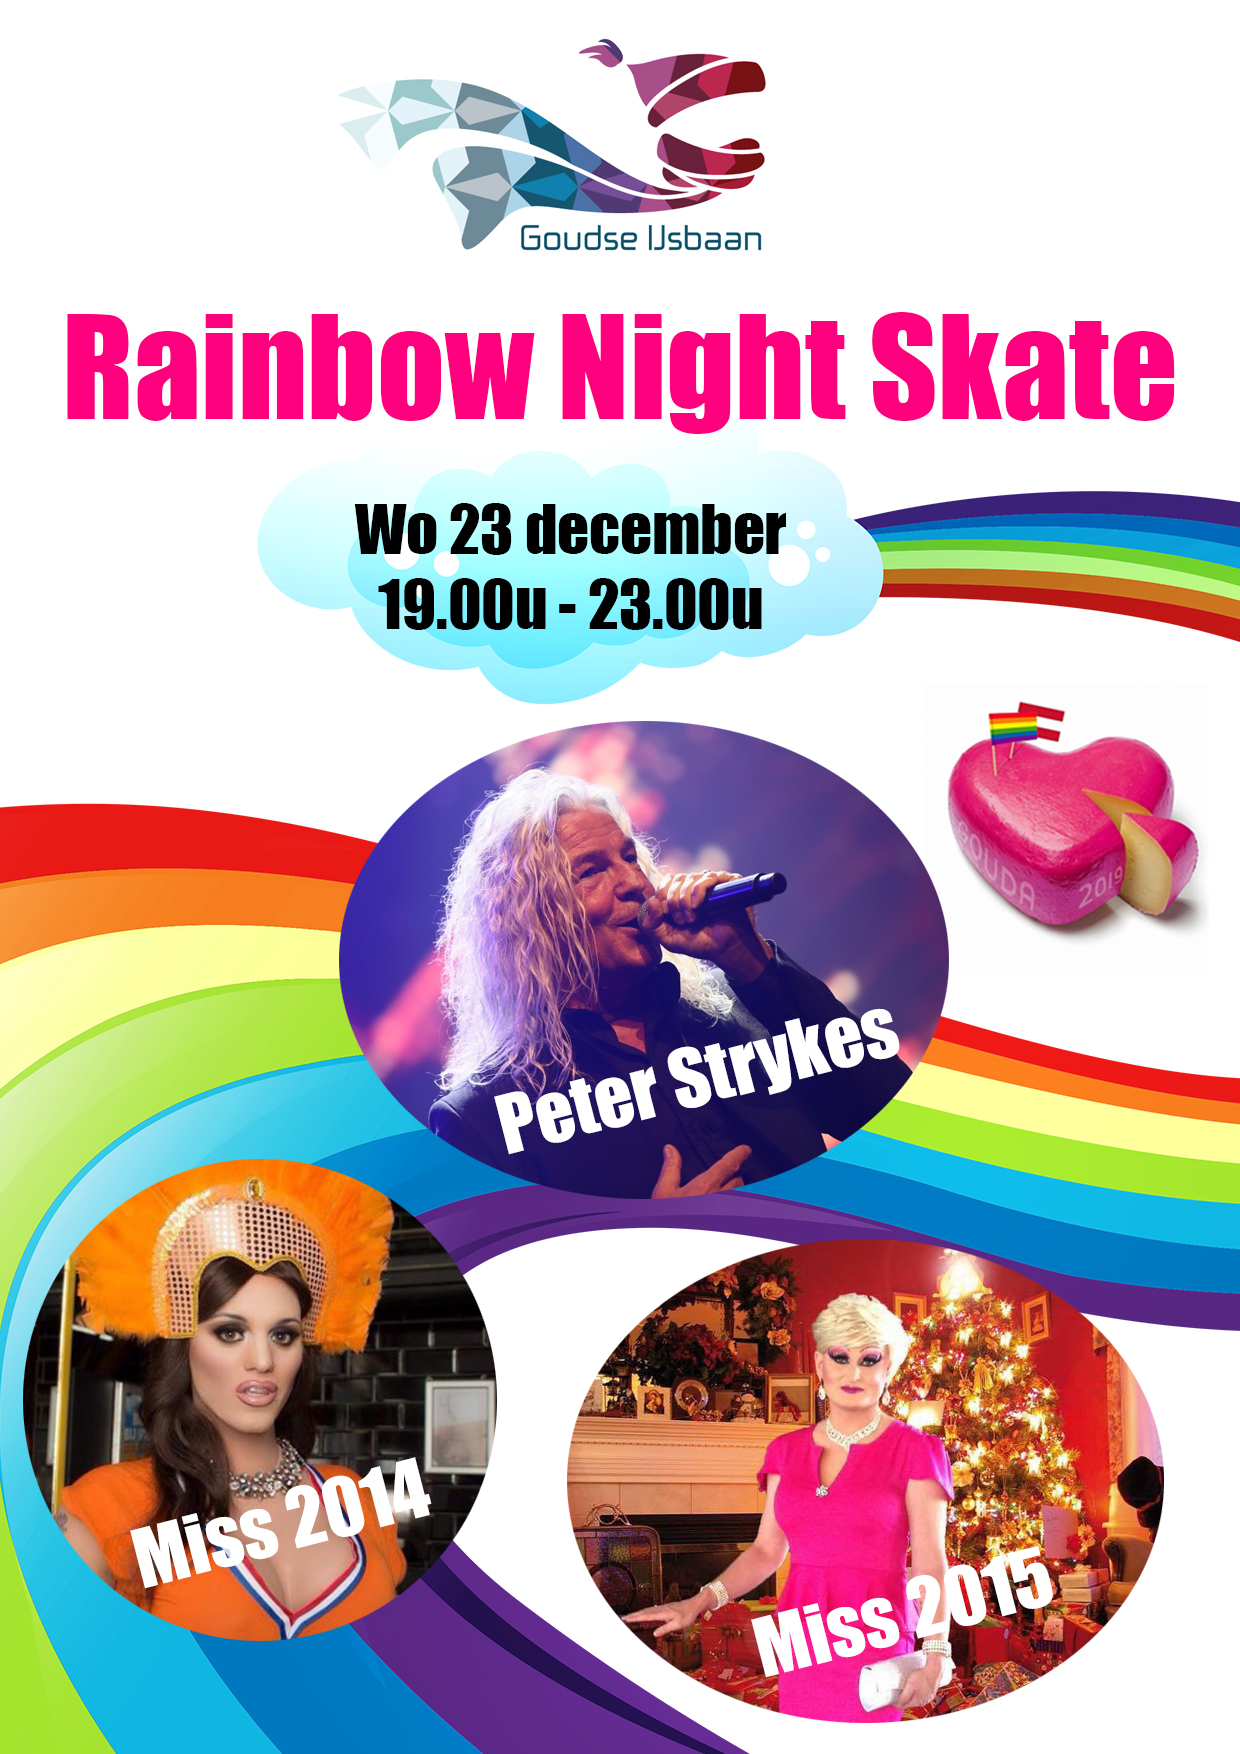 Burgemeester Gouda opent Rainbow Night Skate